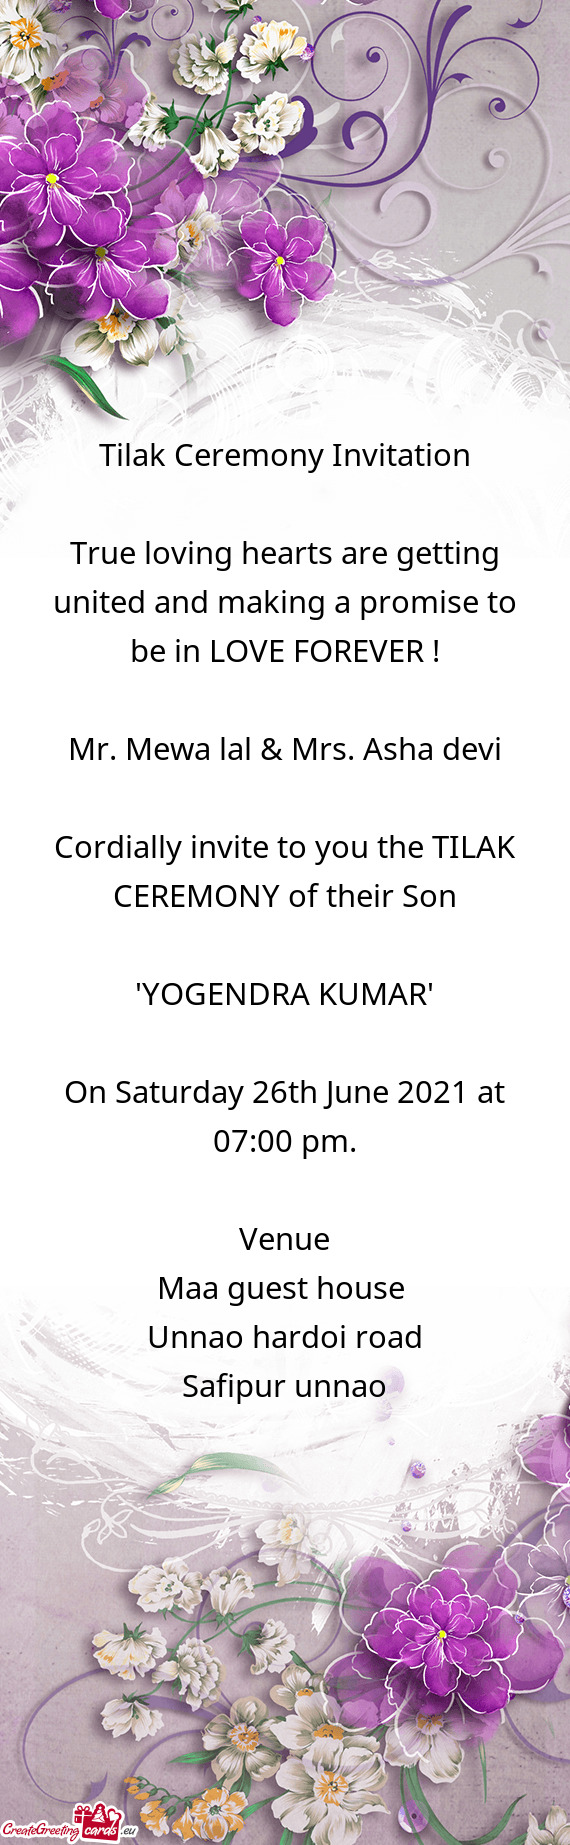 Mr. Mewa lal & Mrs. Asha devi